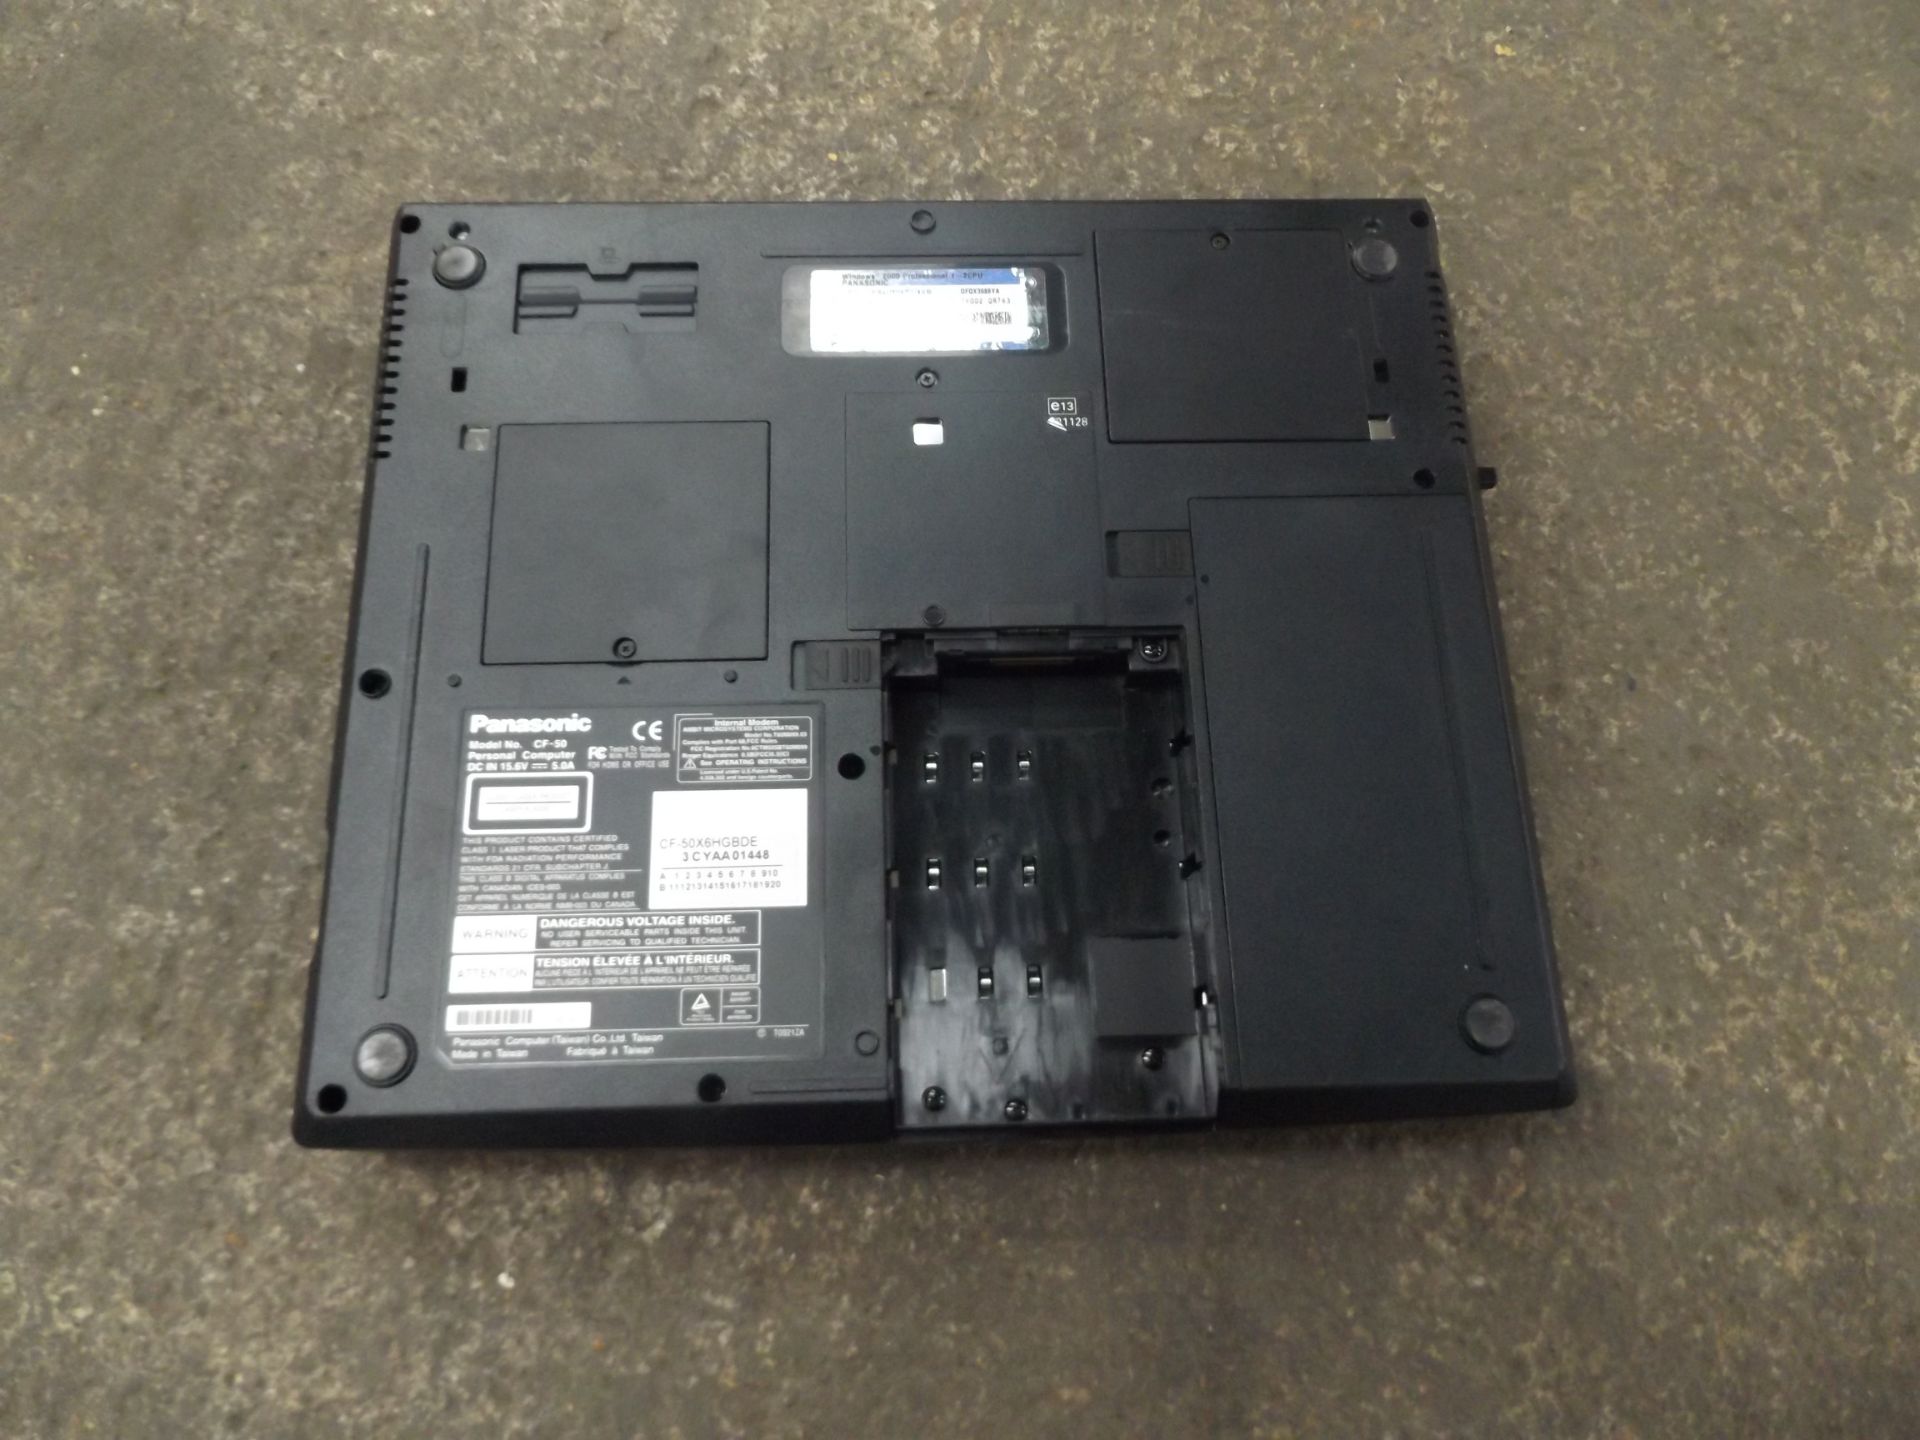 5 x Panasonic CF-50 Toughbook Laptops - Image 10 of 10